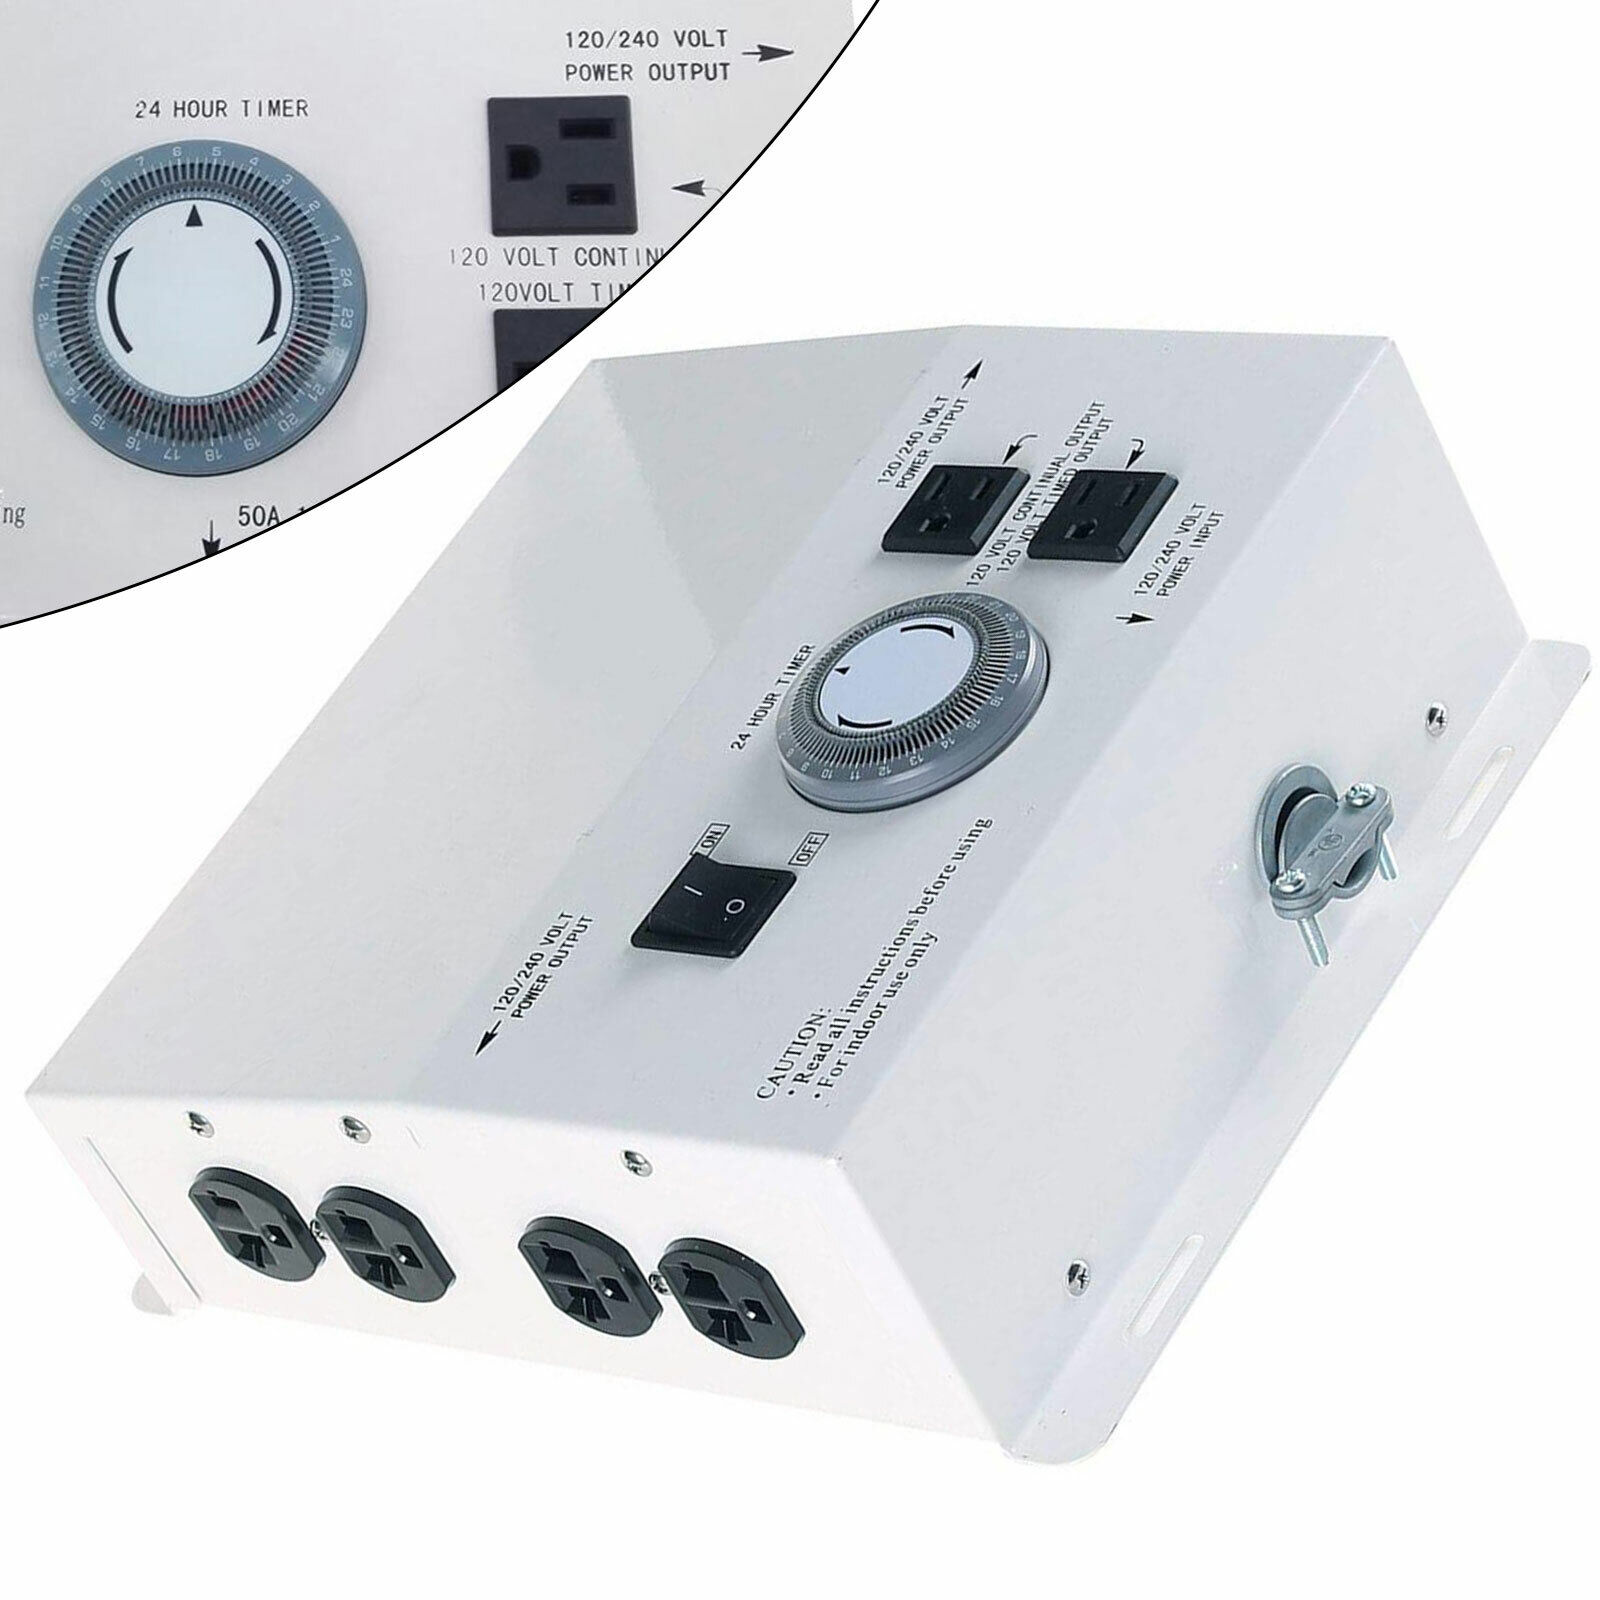 MLC HID White Hydroponic Light Controller Box 240V/120V w/ 8 Outlet + 24hr Timer